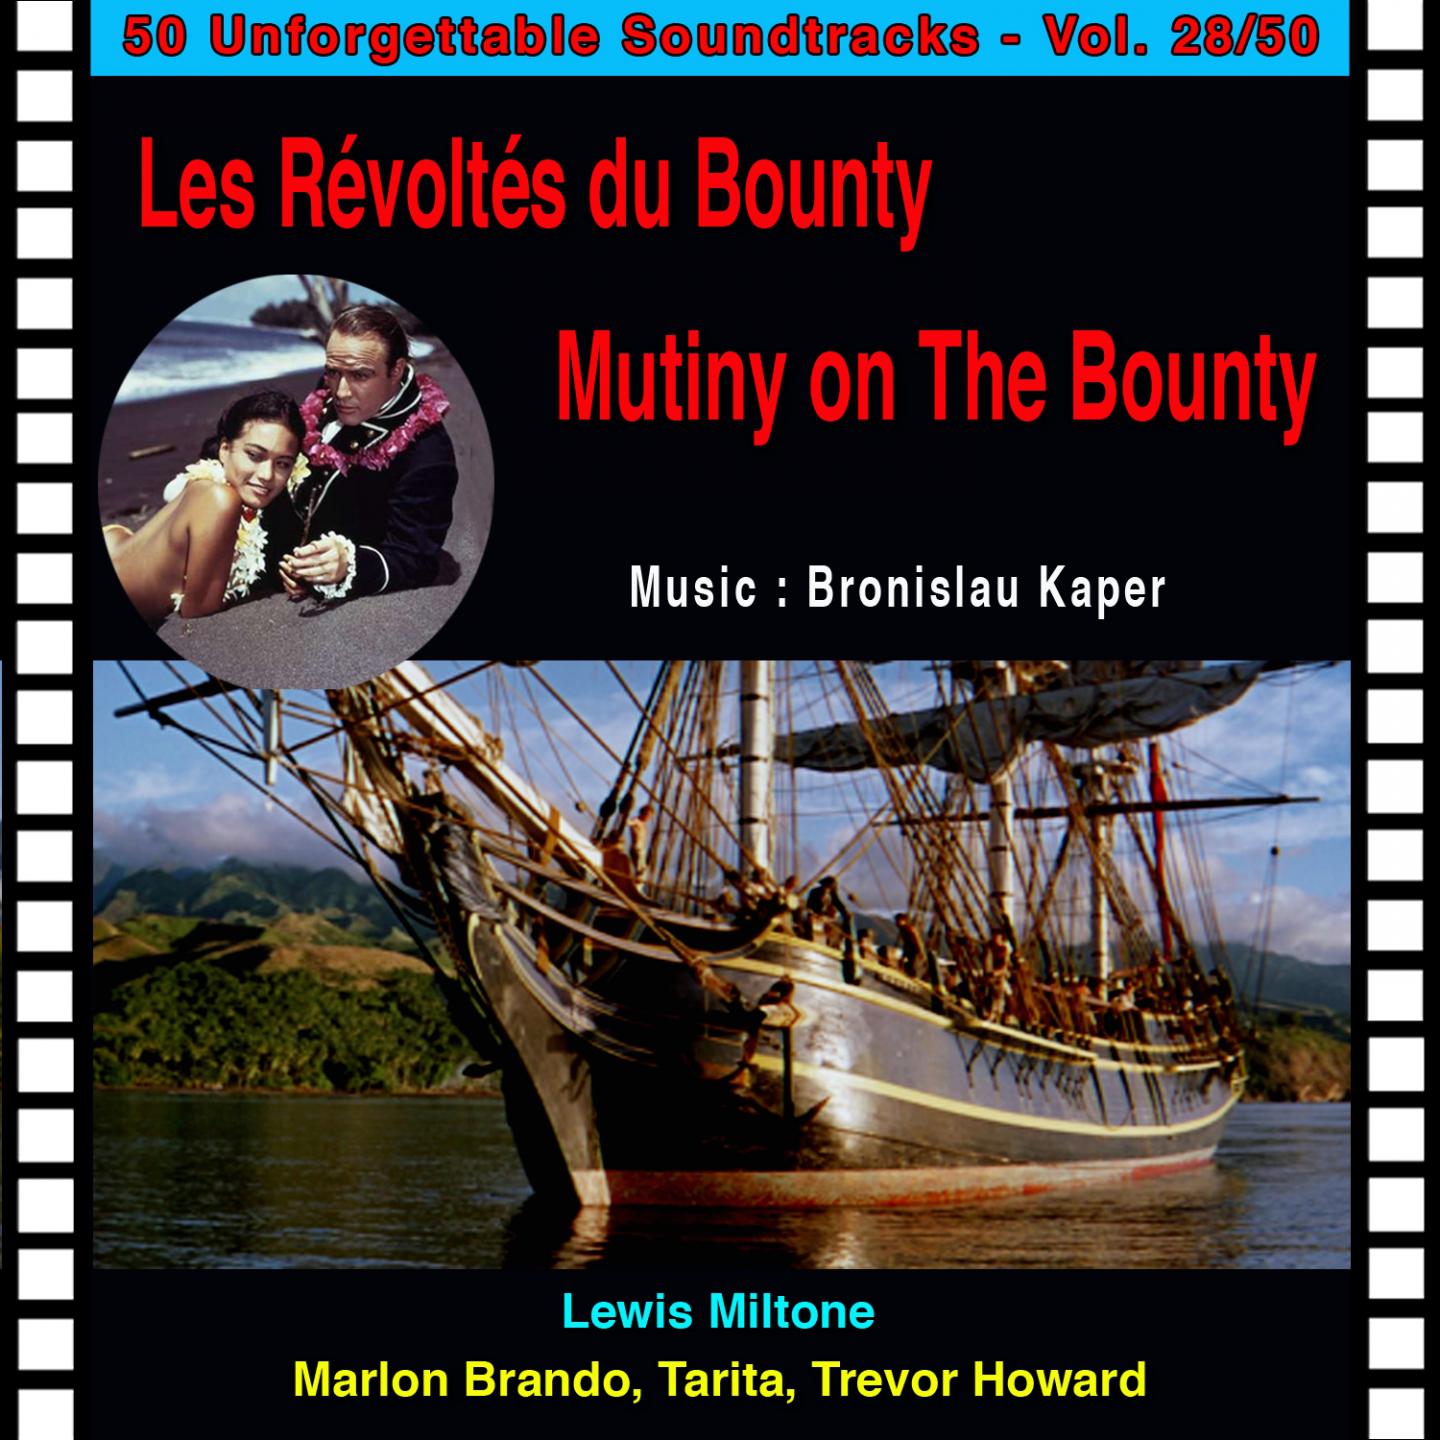 Main Title Bounty Mutiny Les Re volte s Du Bounty  Mutiny on the Bounty